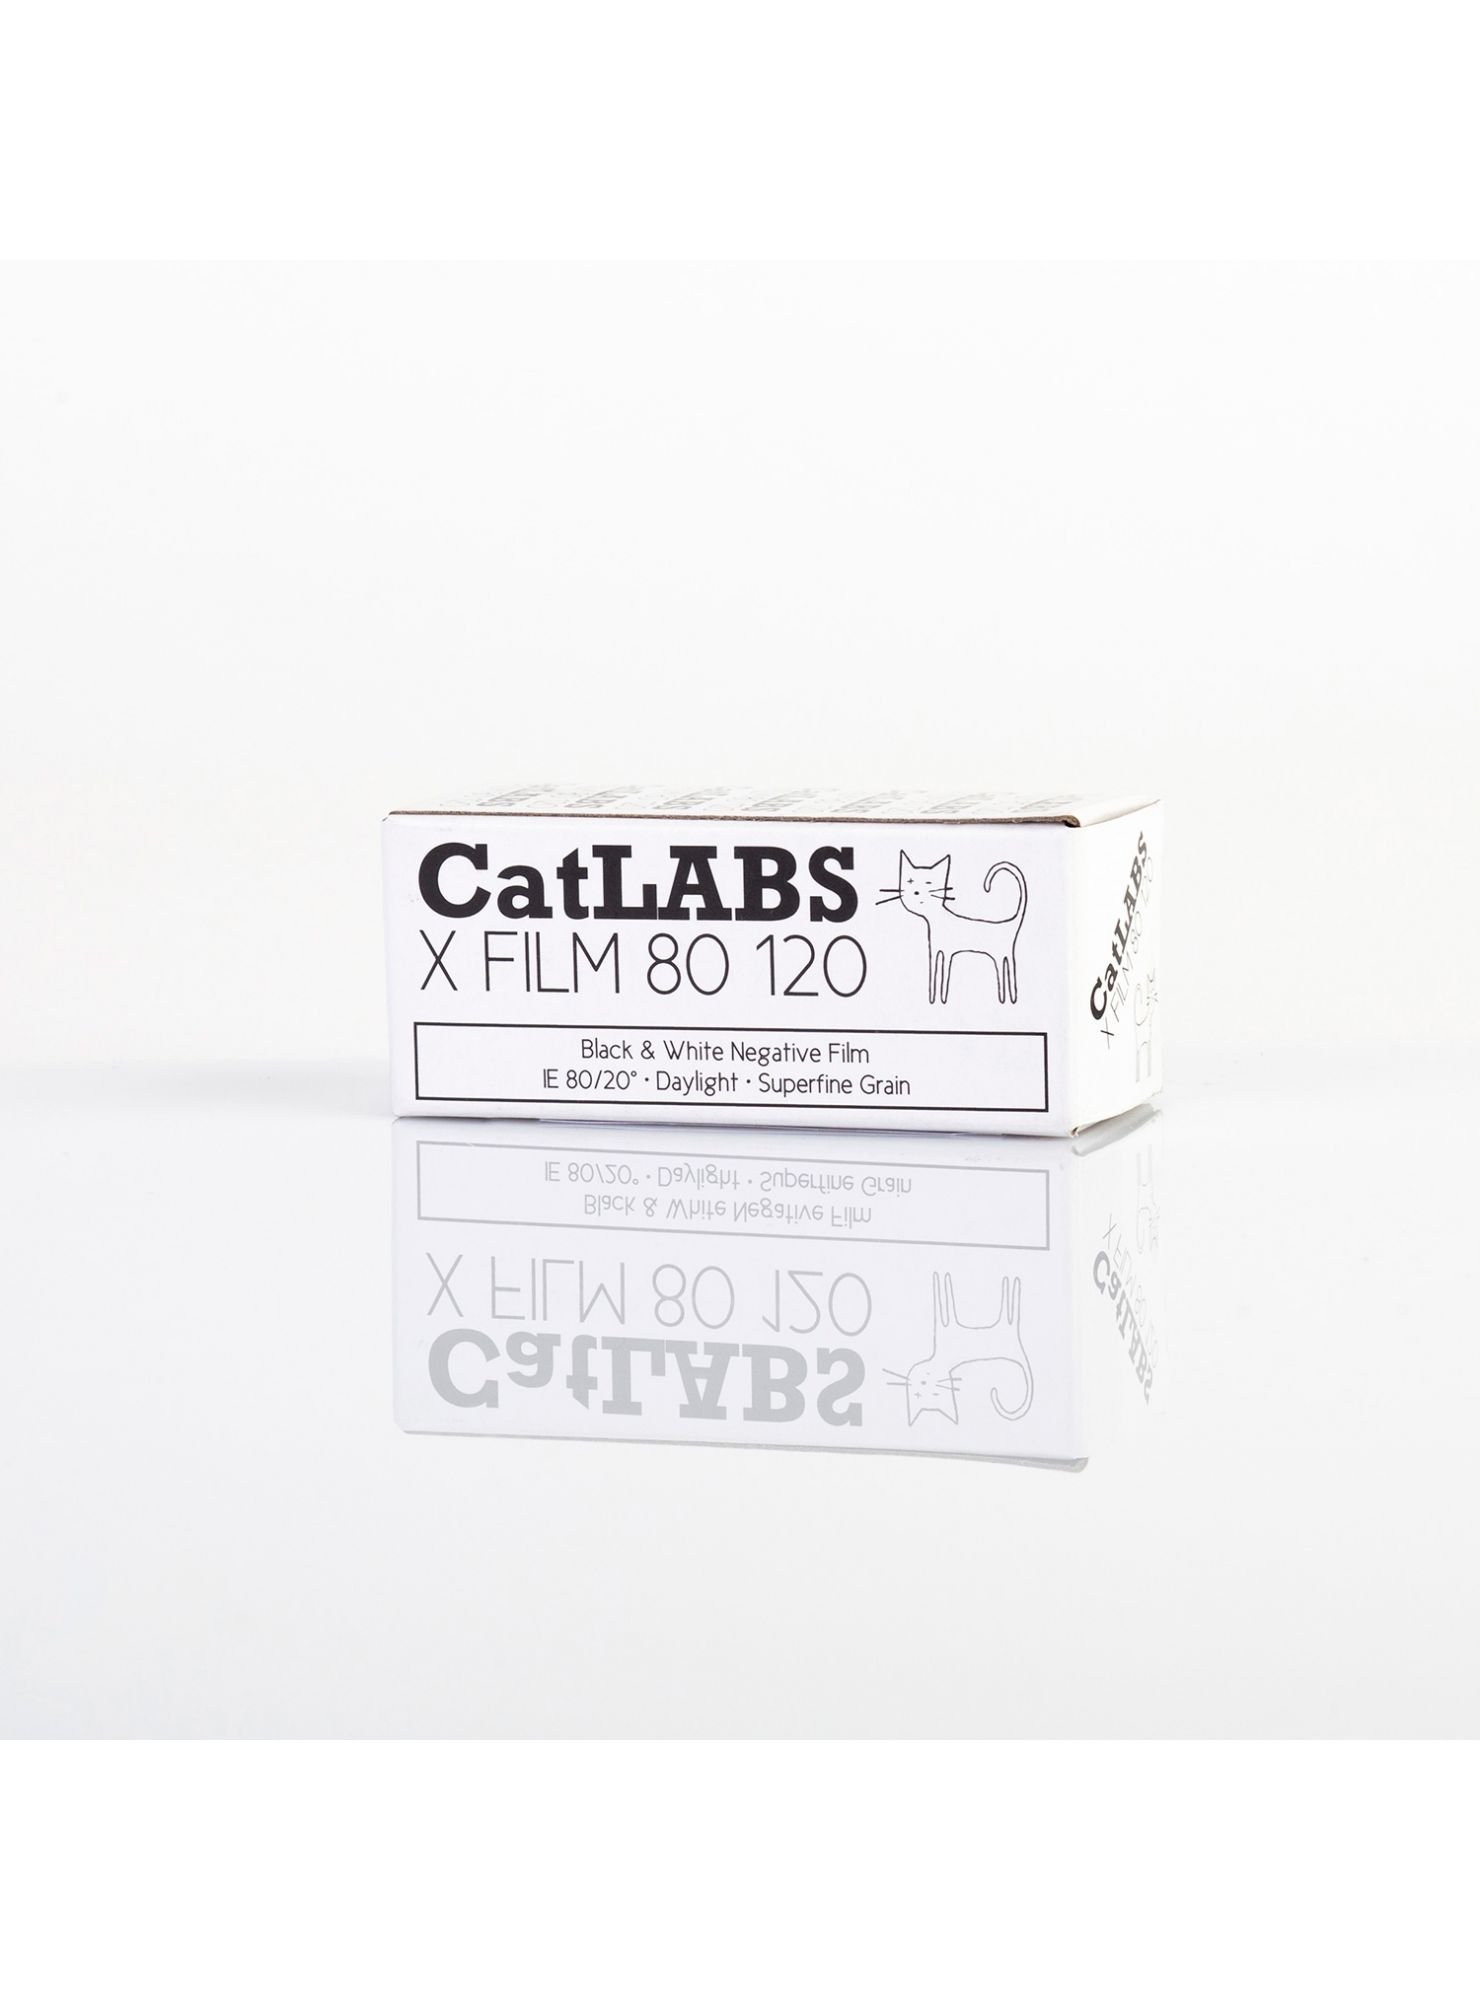 CATLABS - X FILM 80 - 1 rouleau 120